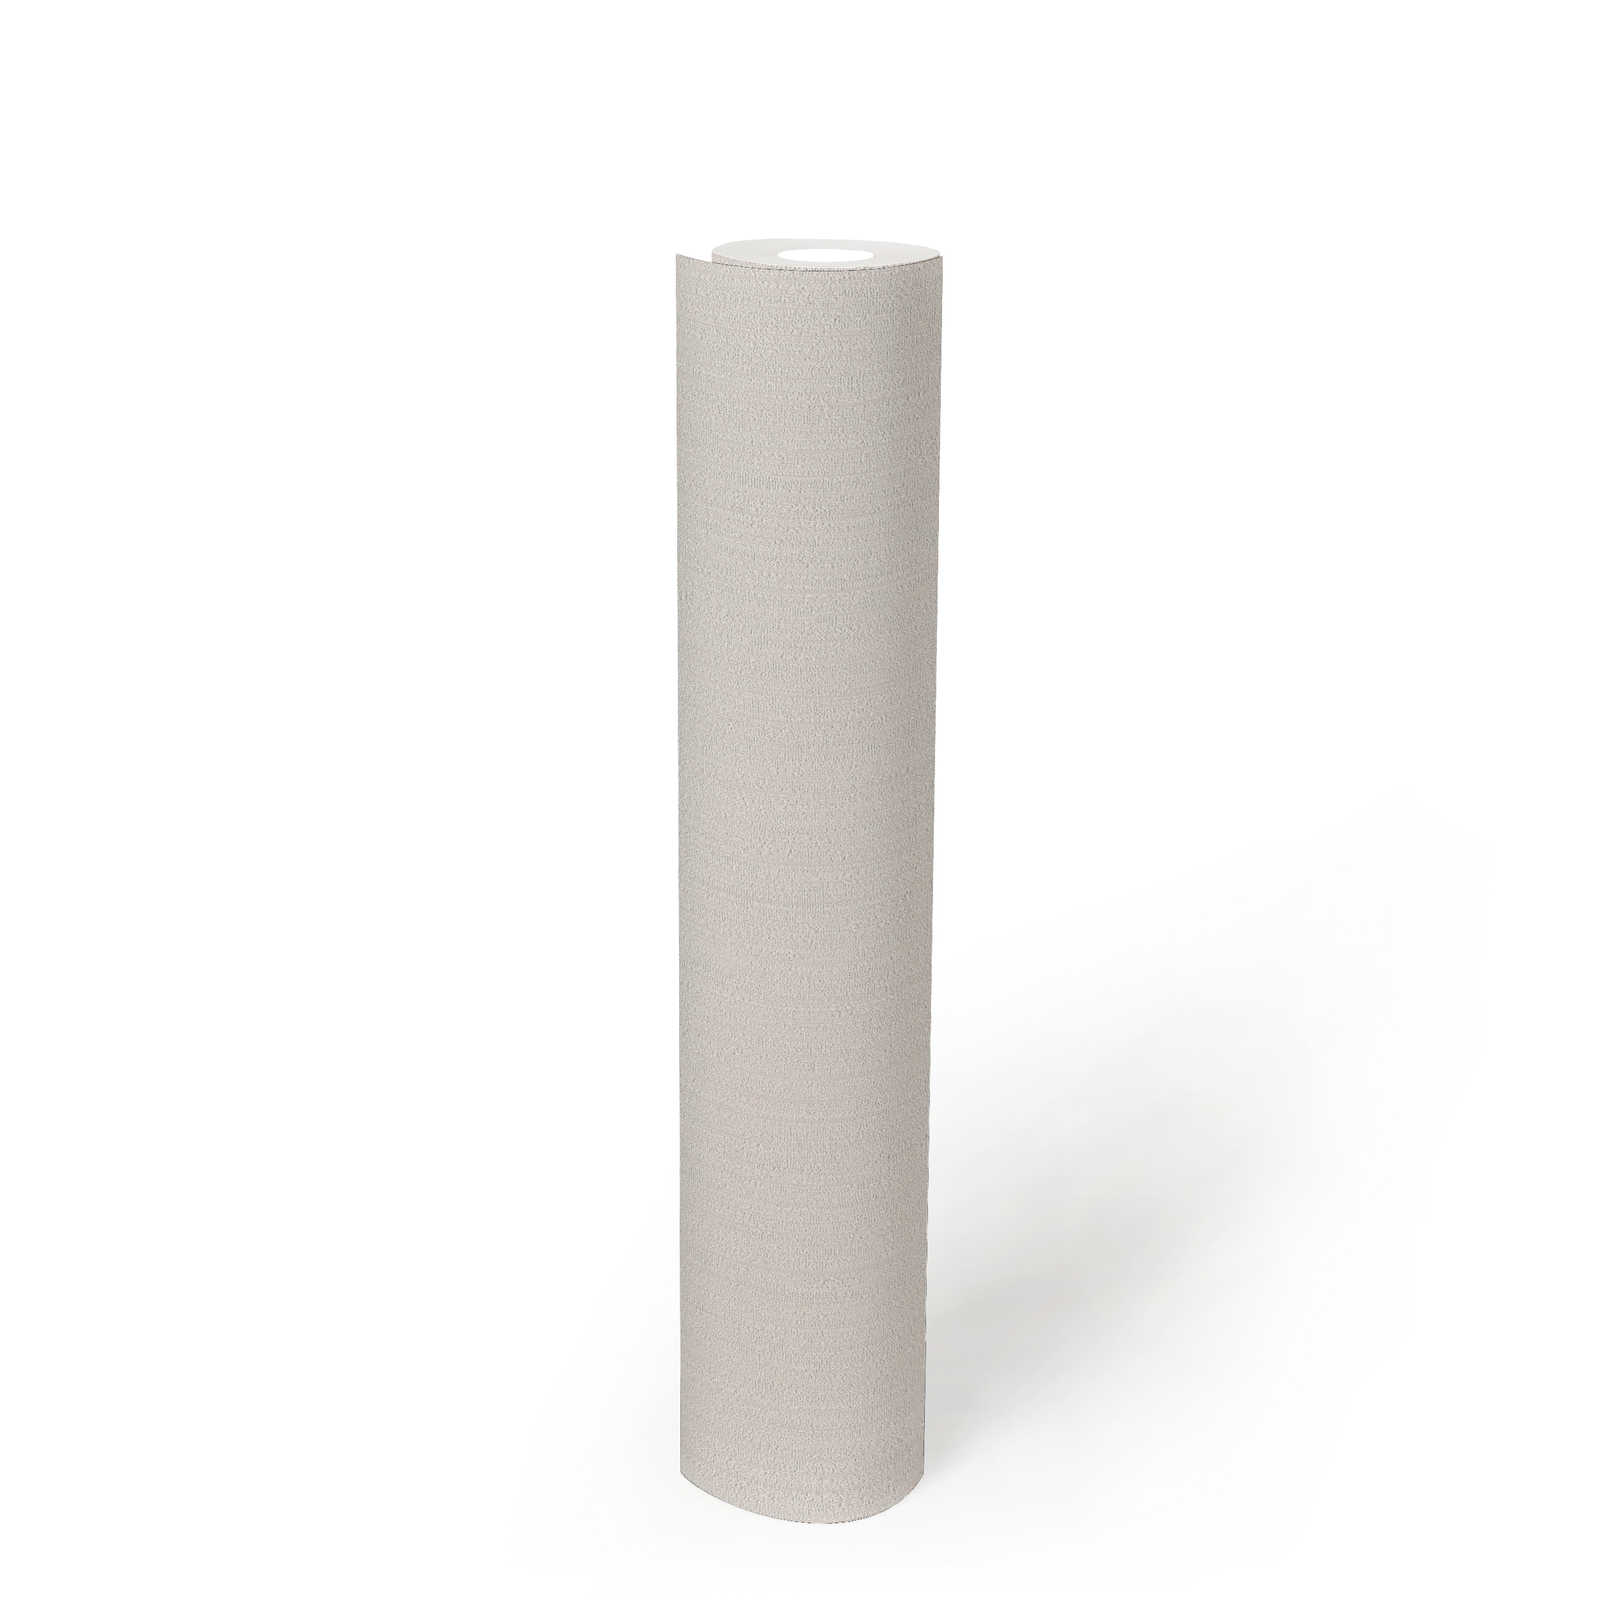             Carta da parati opaca in seta bianco panna con effetto texture naturale
        